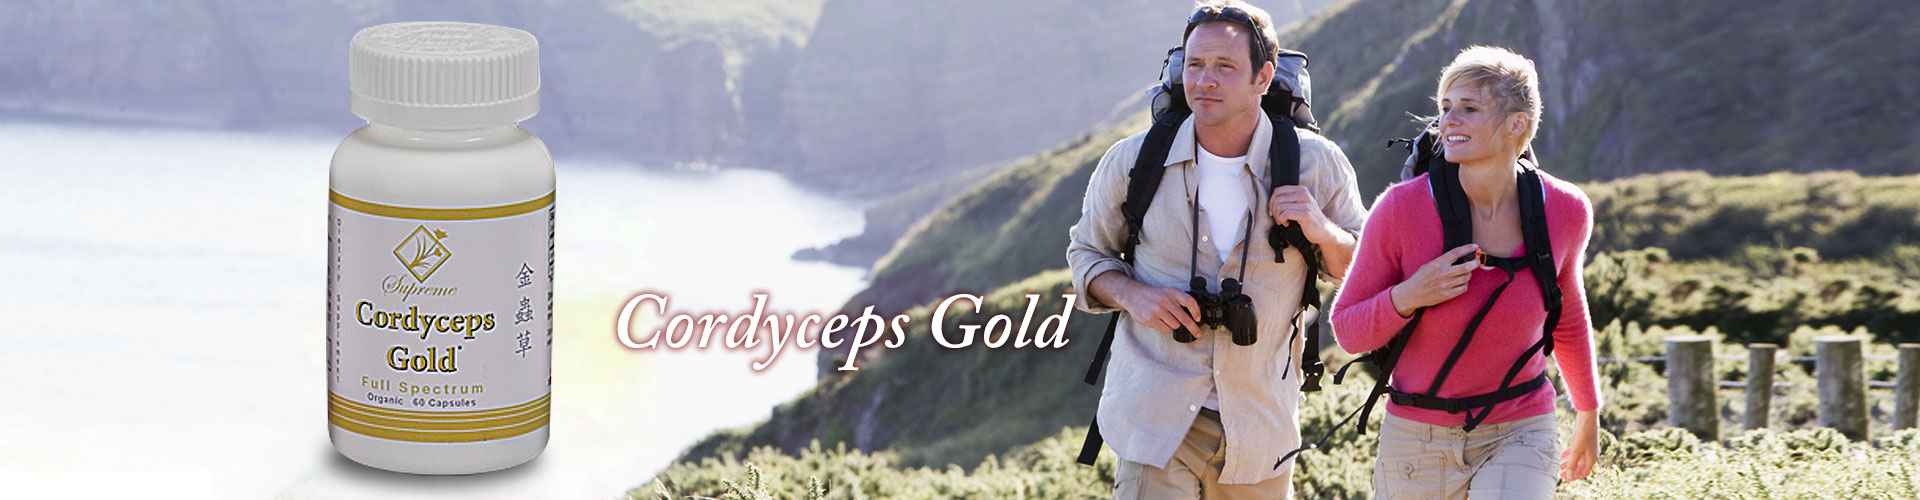 cordyceps gold